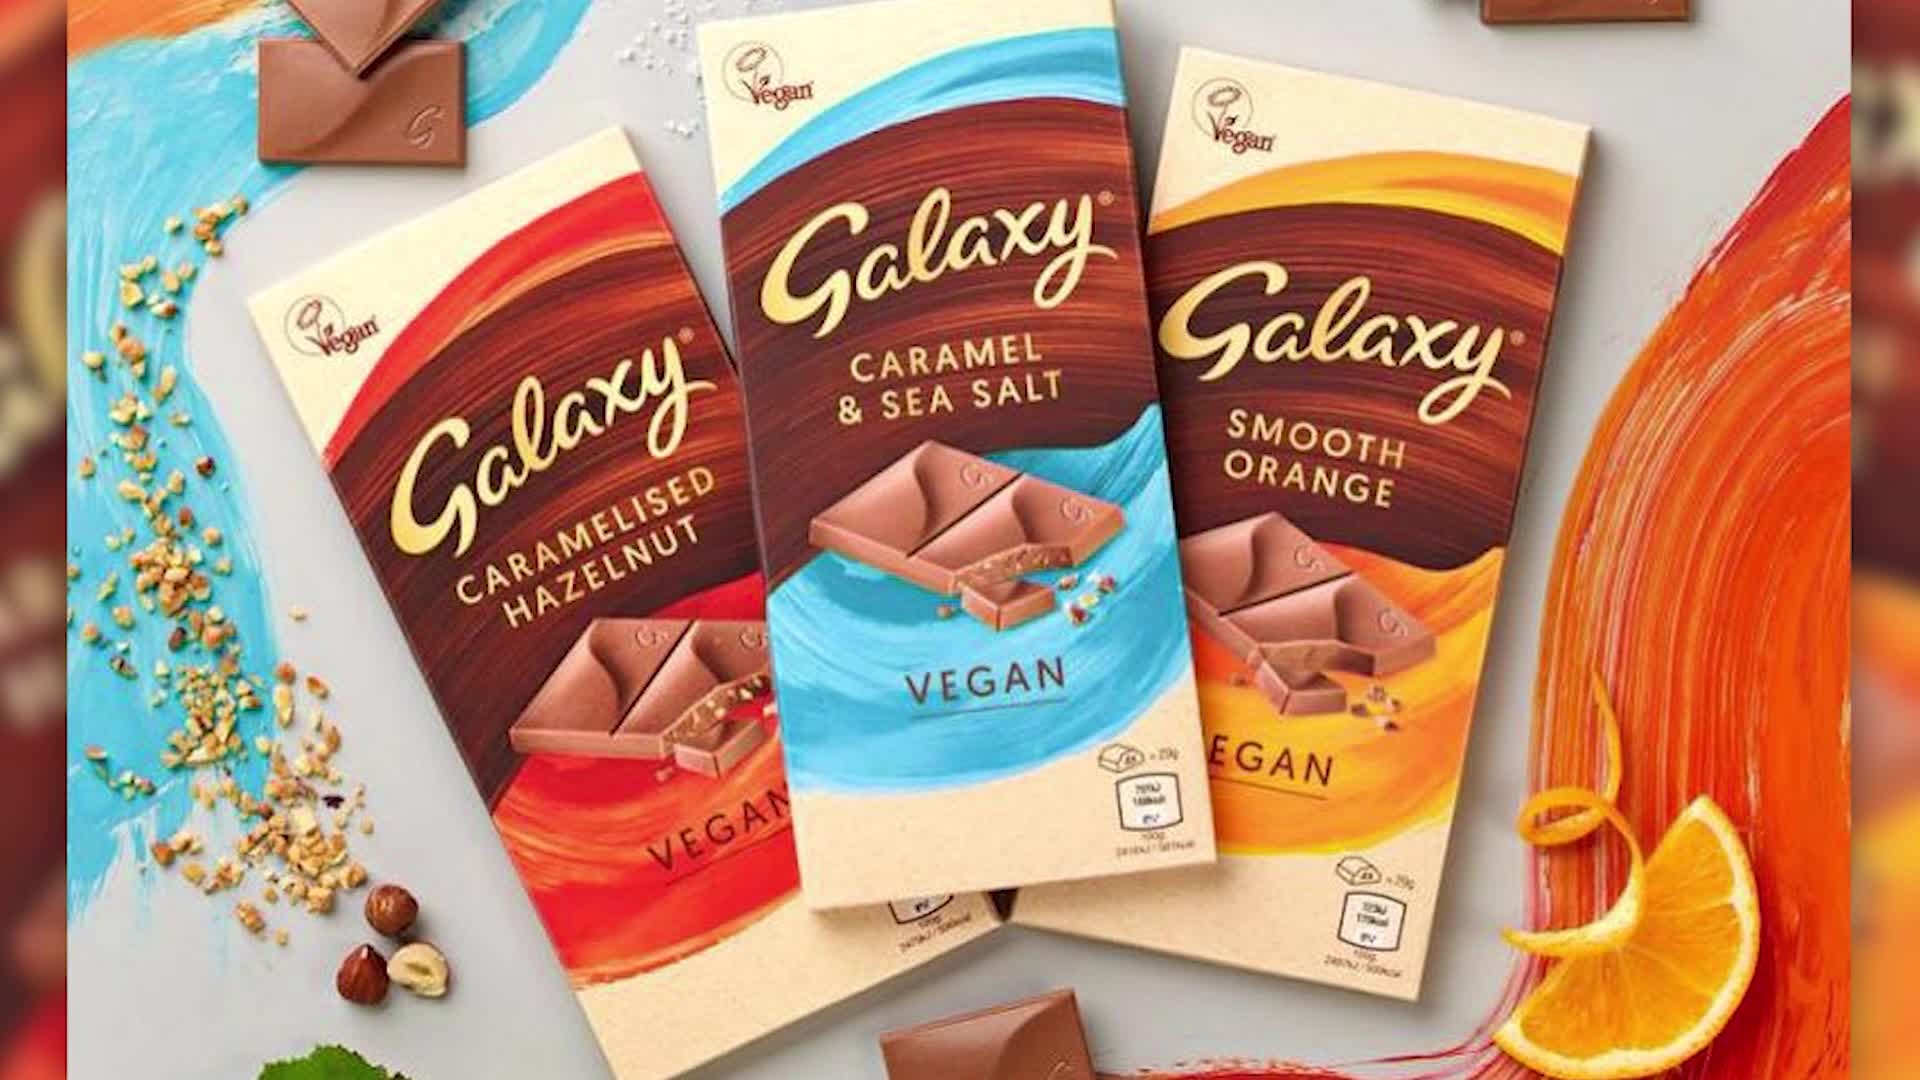 Mars is launching a vegan milk chocolate bar